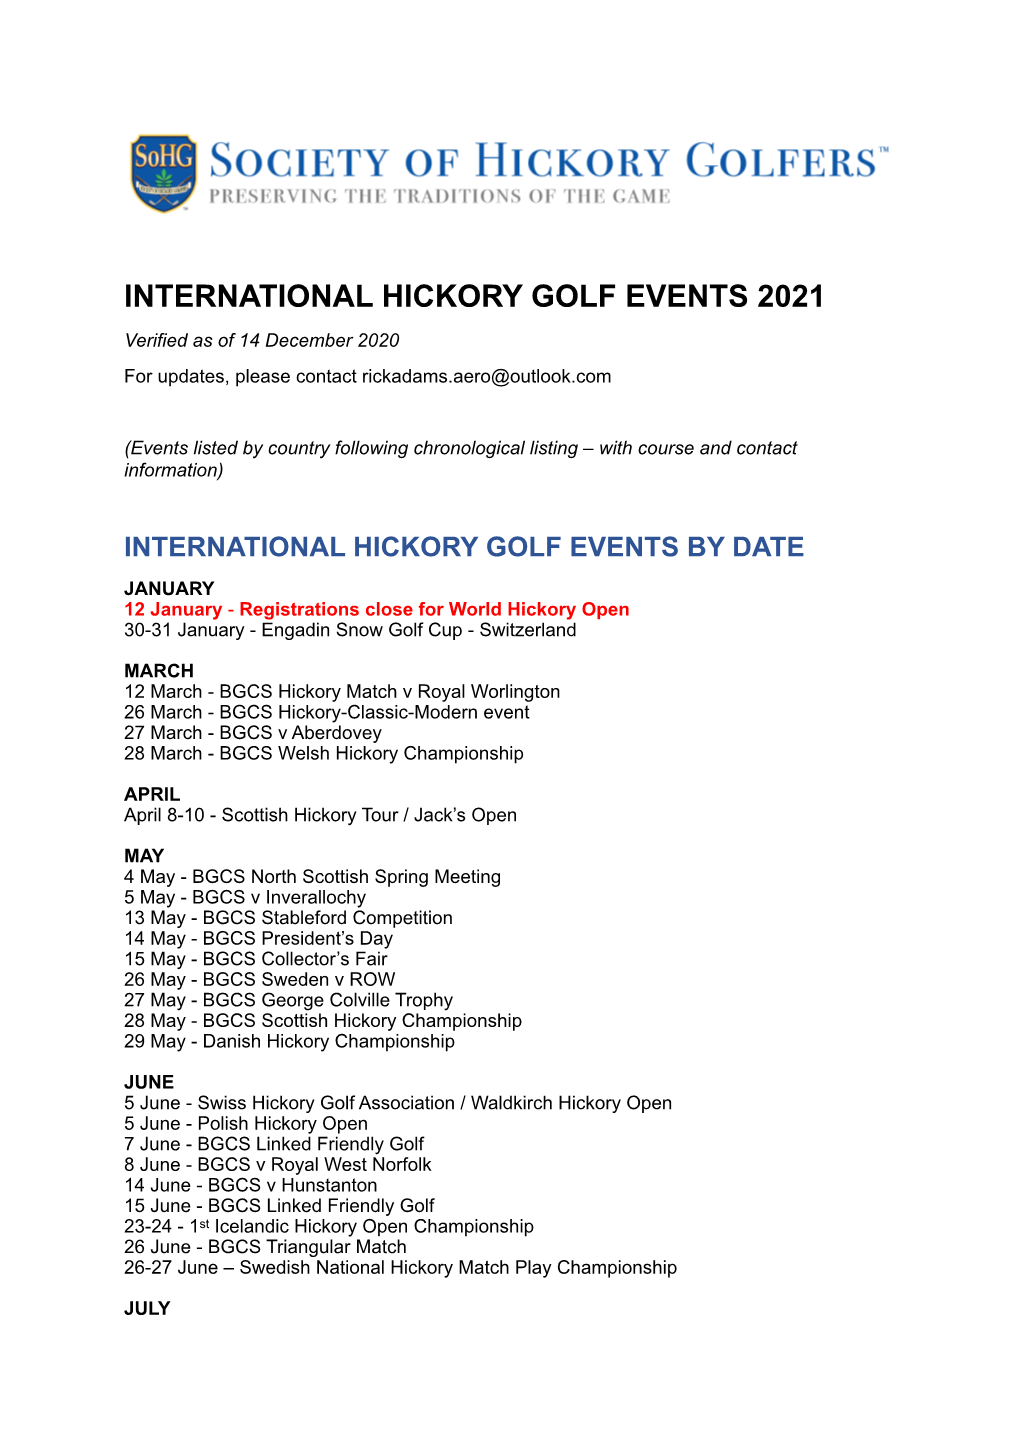 INTERNATIONAL HICKORY GOLF EVENTS 2021 Verified As of 14 December 2020 for Updates, Please Contact Rickadams.Aero@Outlook.Com